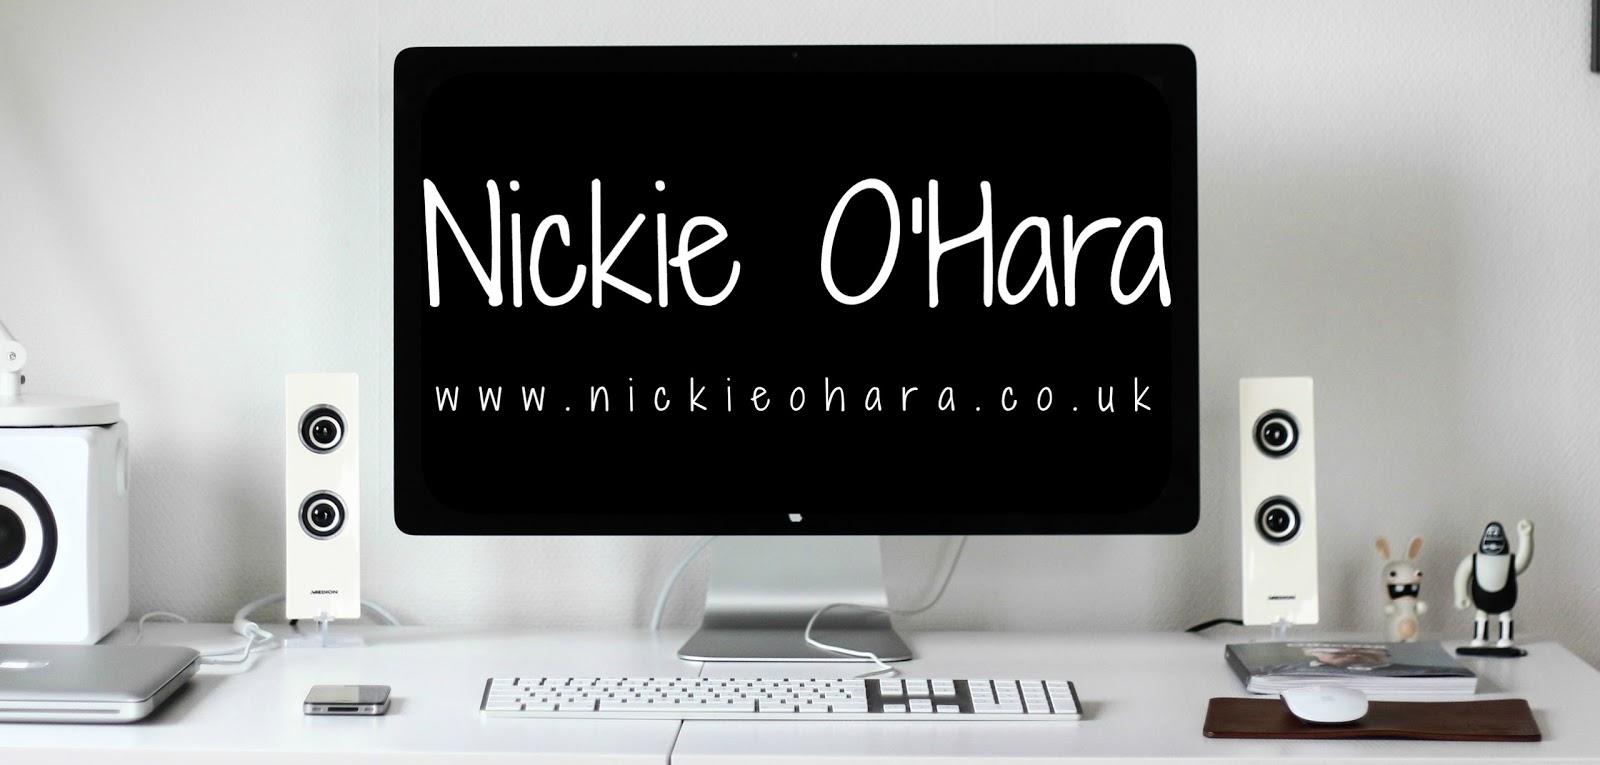 Nickie O'Hara